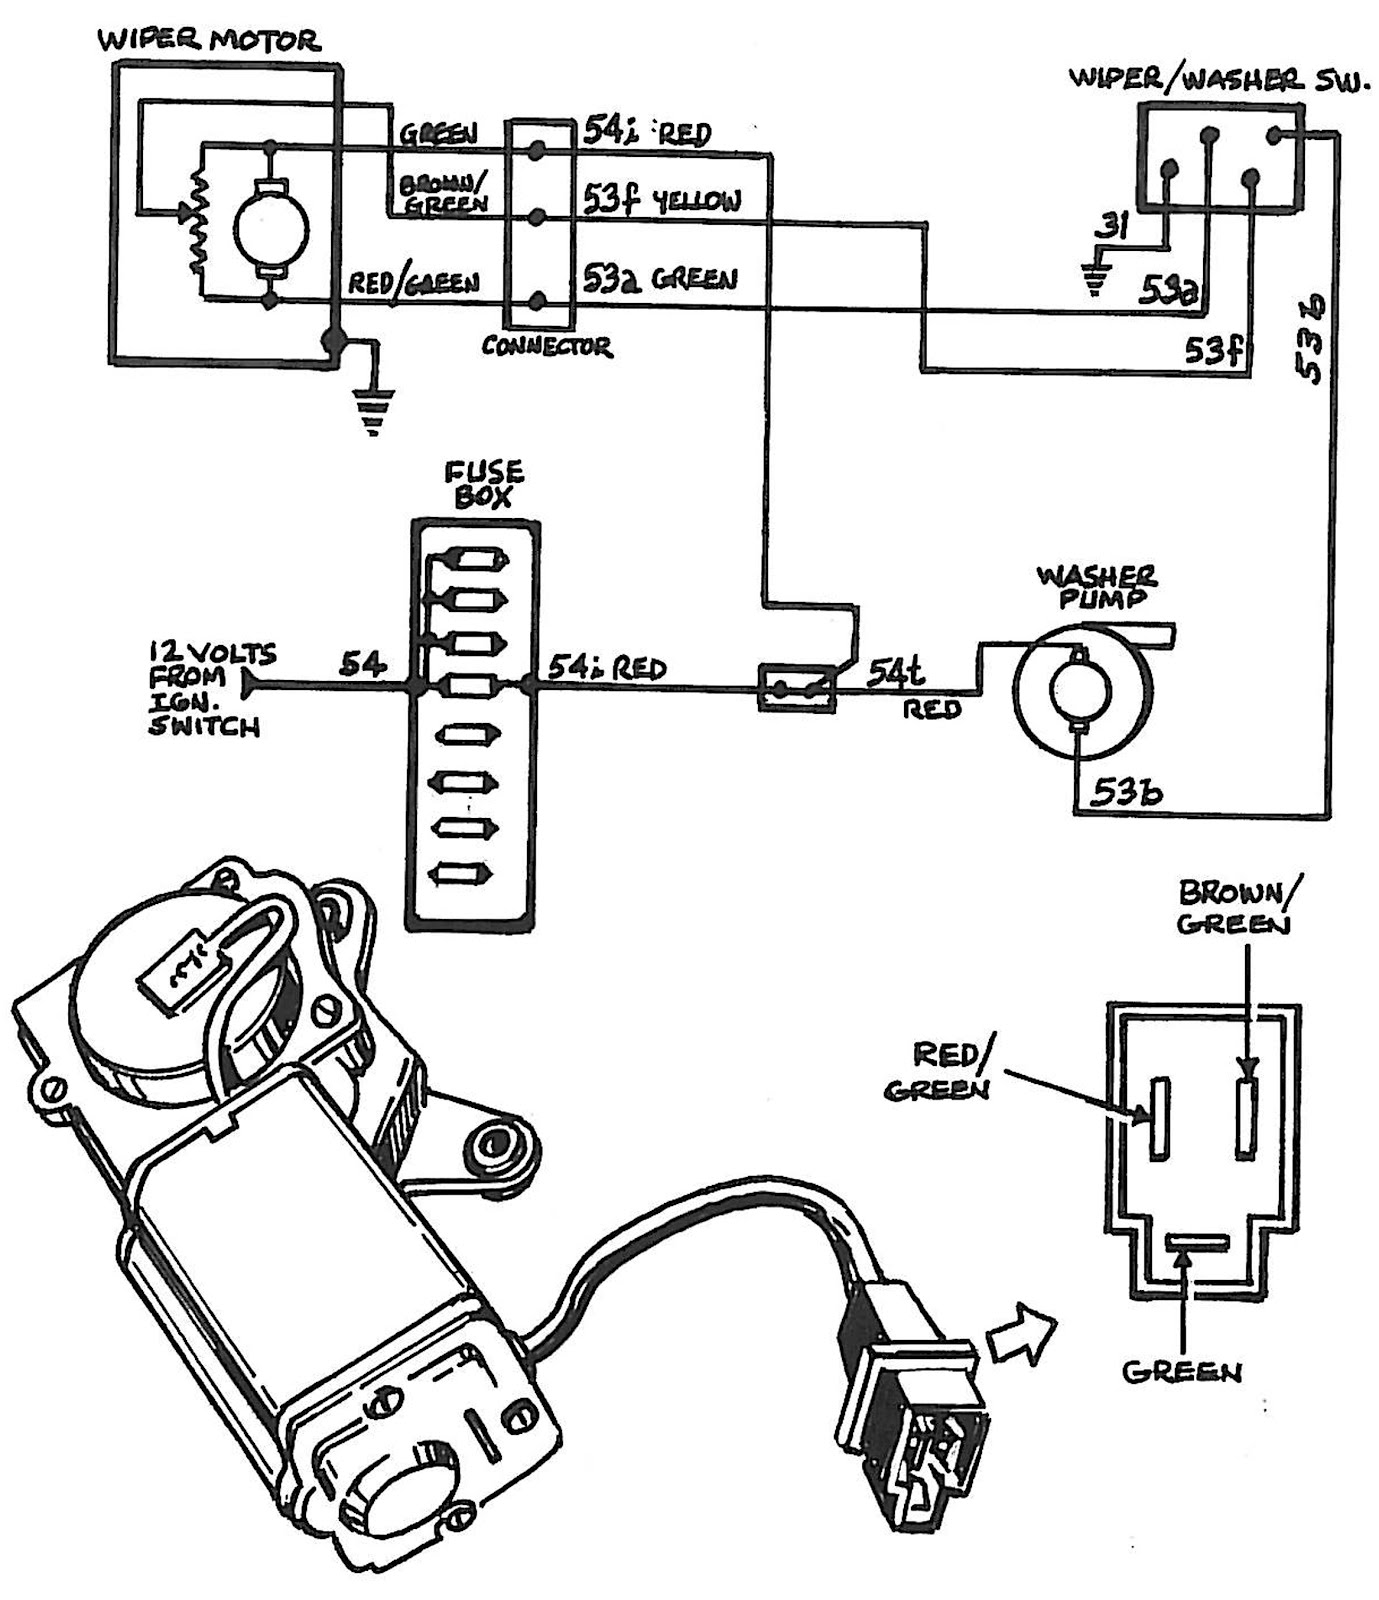 Diagram Camaro Wiper Motor Diagram Full Version Hd Quality Motor Diagram Diagramofplants Bagarellum It